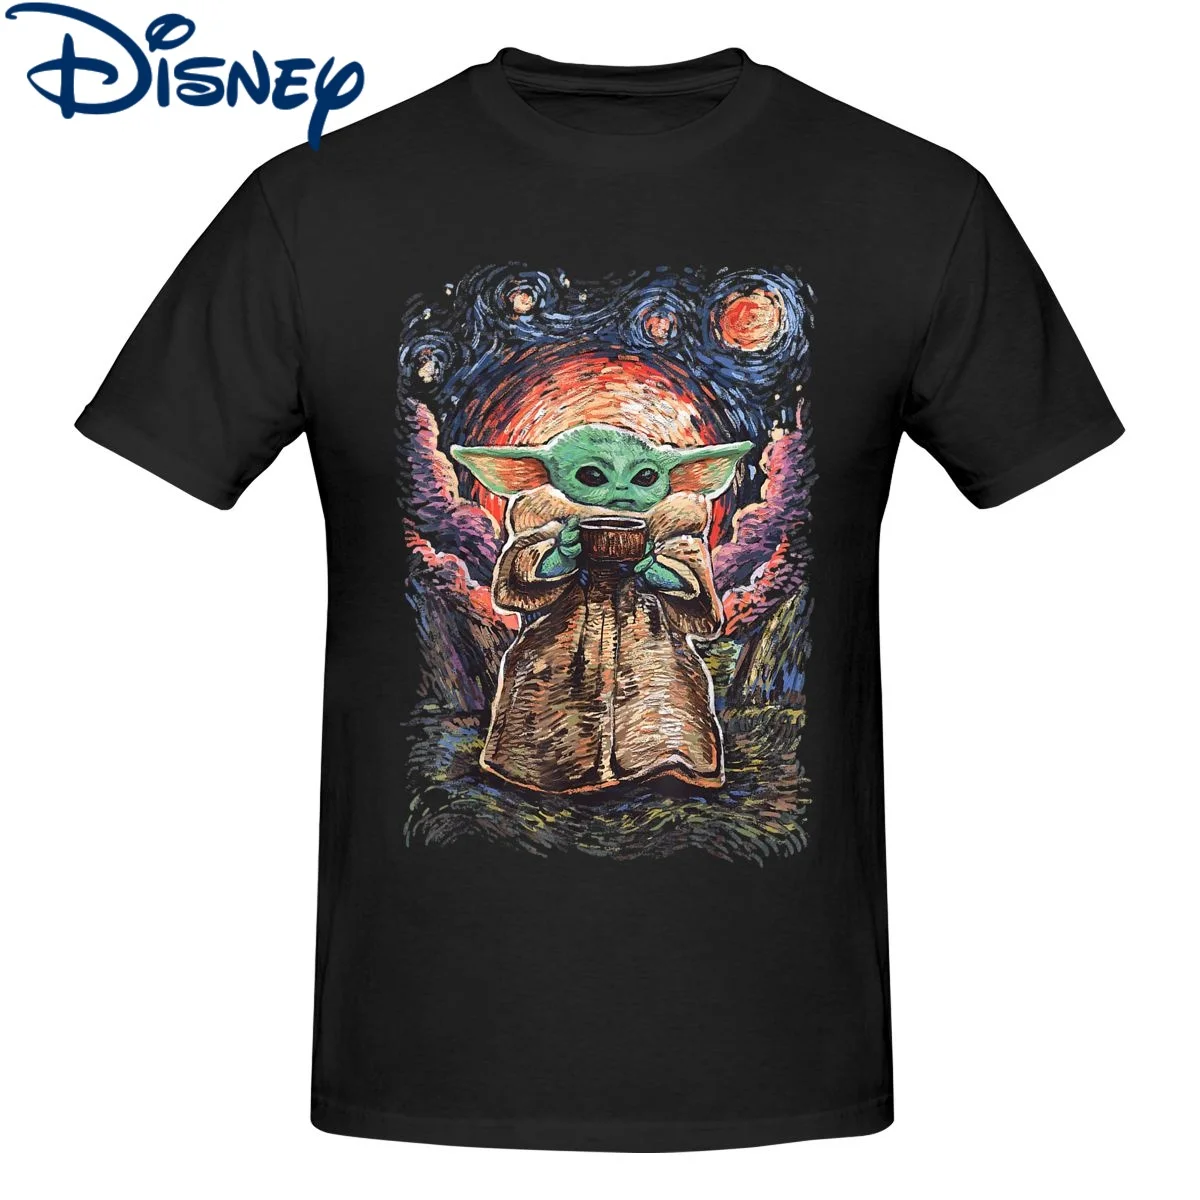 

Disney Star Wars T Shirt Men's Cotton Fun T-Shirts Crewneck The Child Starry Night Tees Short Sleeve Disney Clothes Gift Idea